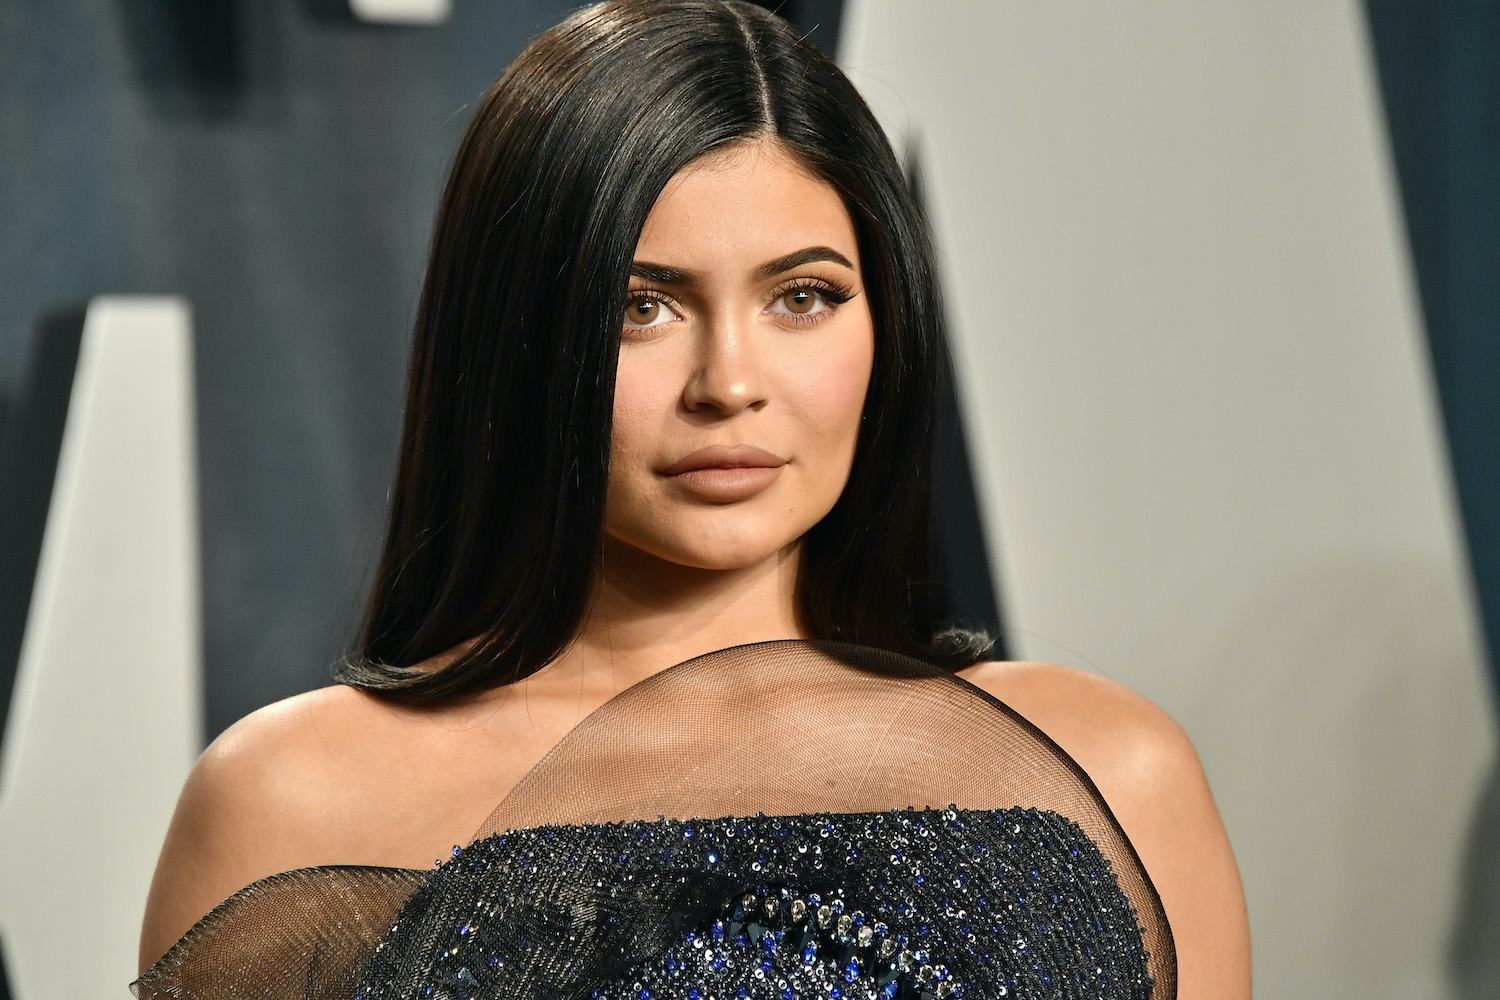 Kylie Jenner attends the 2020 Vanity Fair Oscar Party